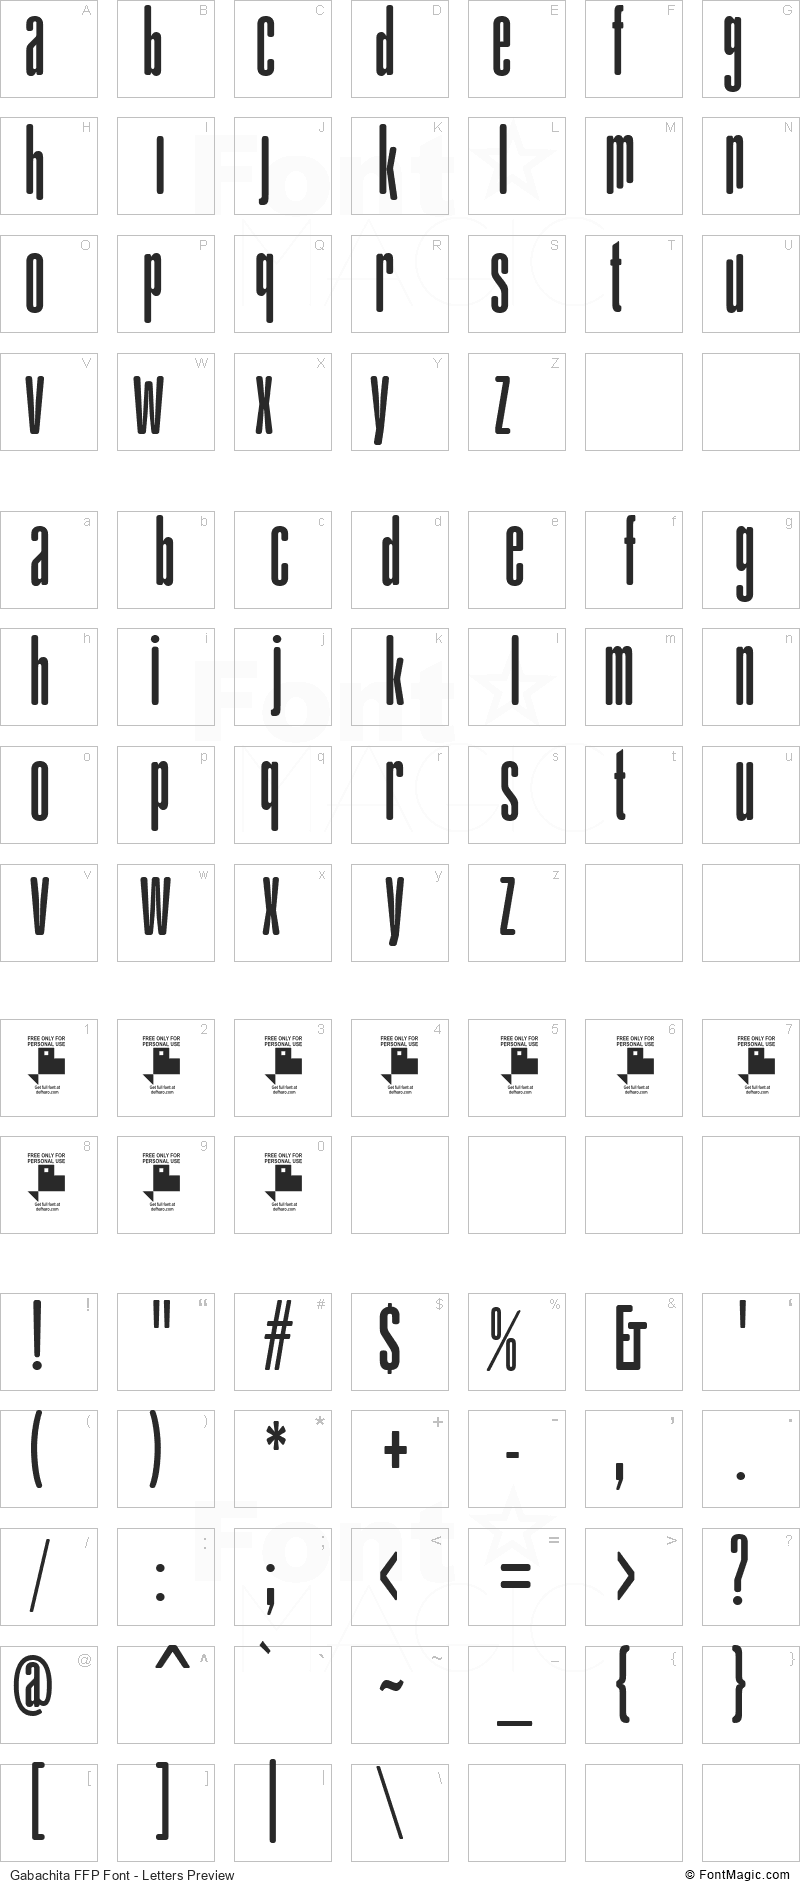 Gabachita FFP Font - All Latters Preview Chart